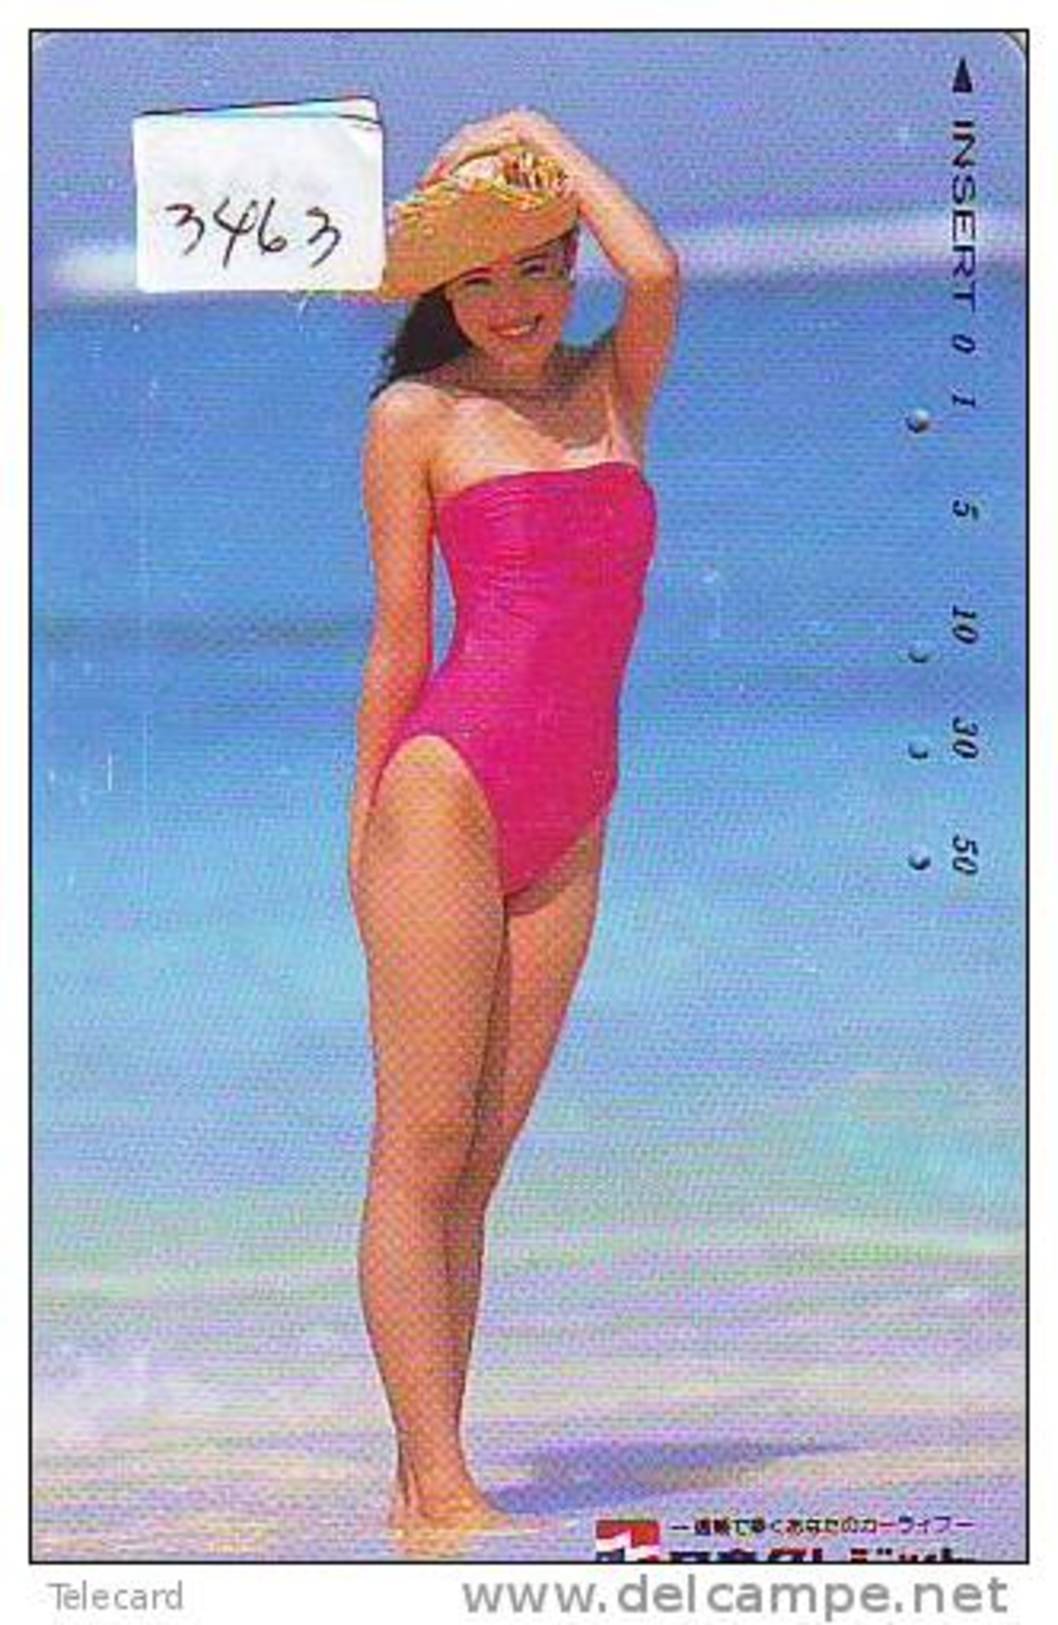 Télécarte Japon EROTIQUE (3463) Lingerie - EROTIC Japan Phonecard - EROTIK - EROTIEK - BATHCLOTHES * NU FEMME NUE * NUDE - Mode